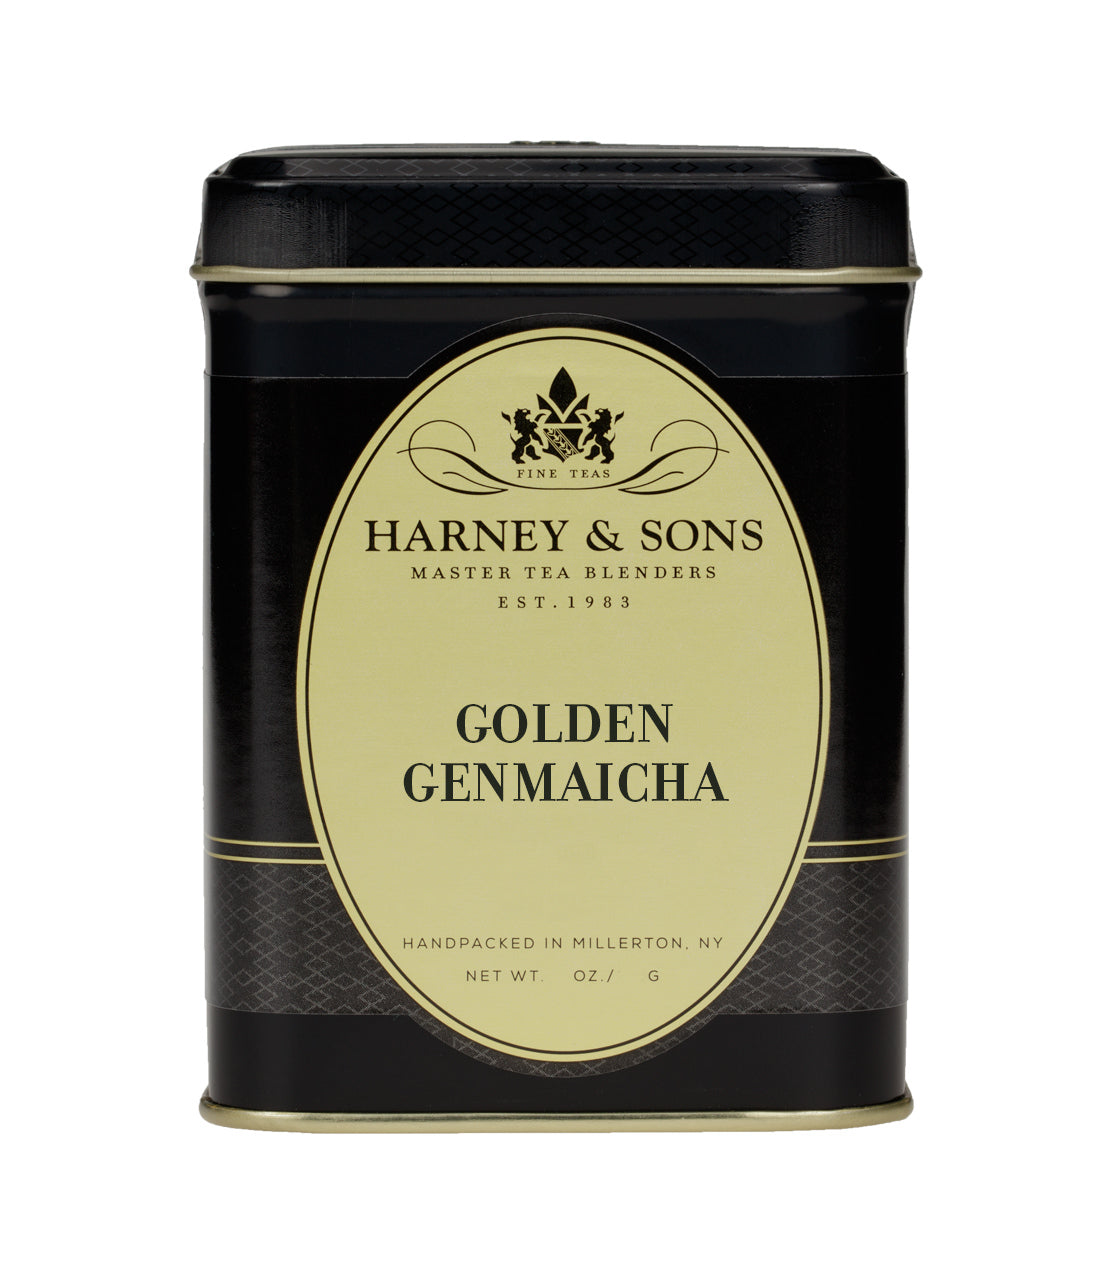 Golden Genmaicha - Loose 2 oz. Tin - Harney & Sons Fine Teas